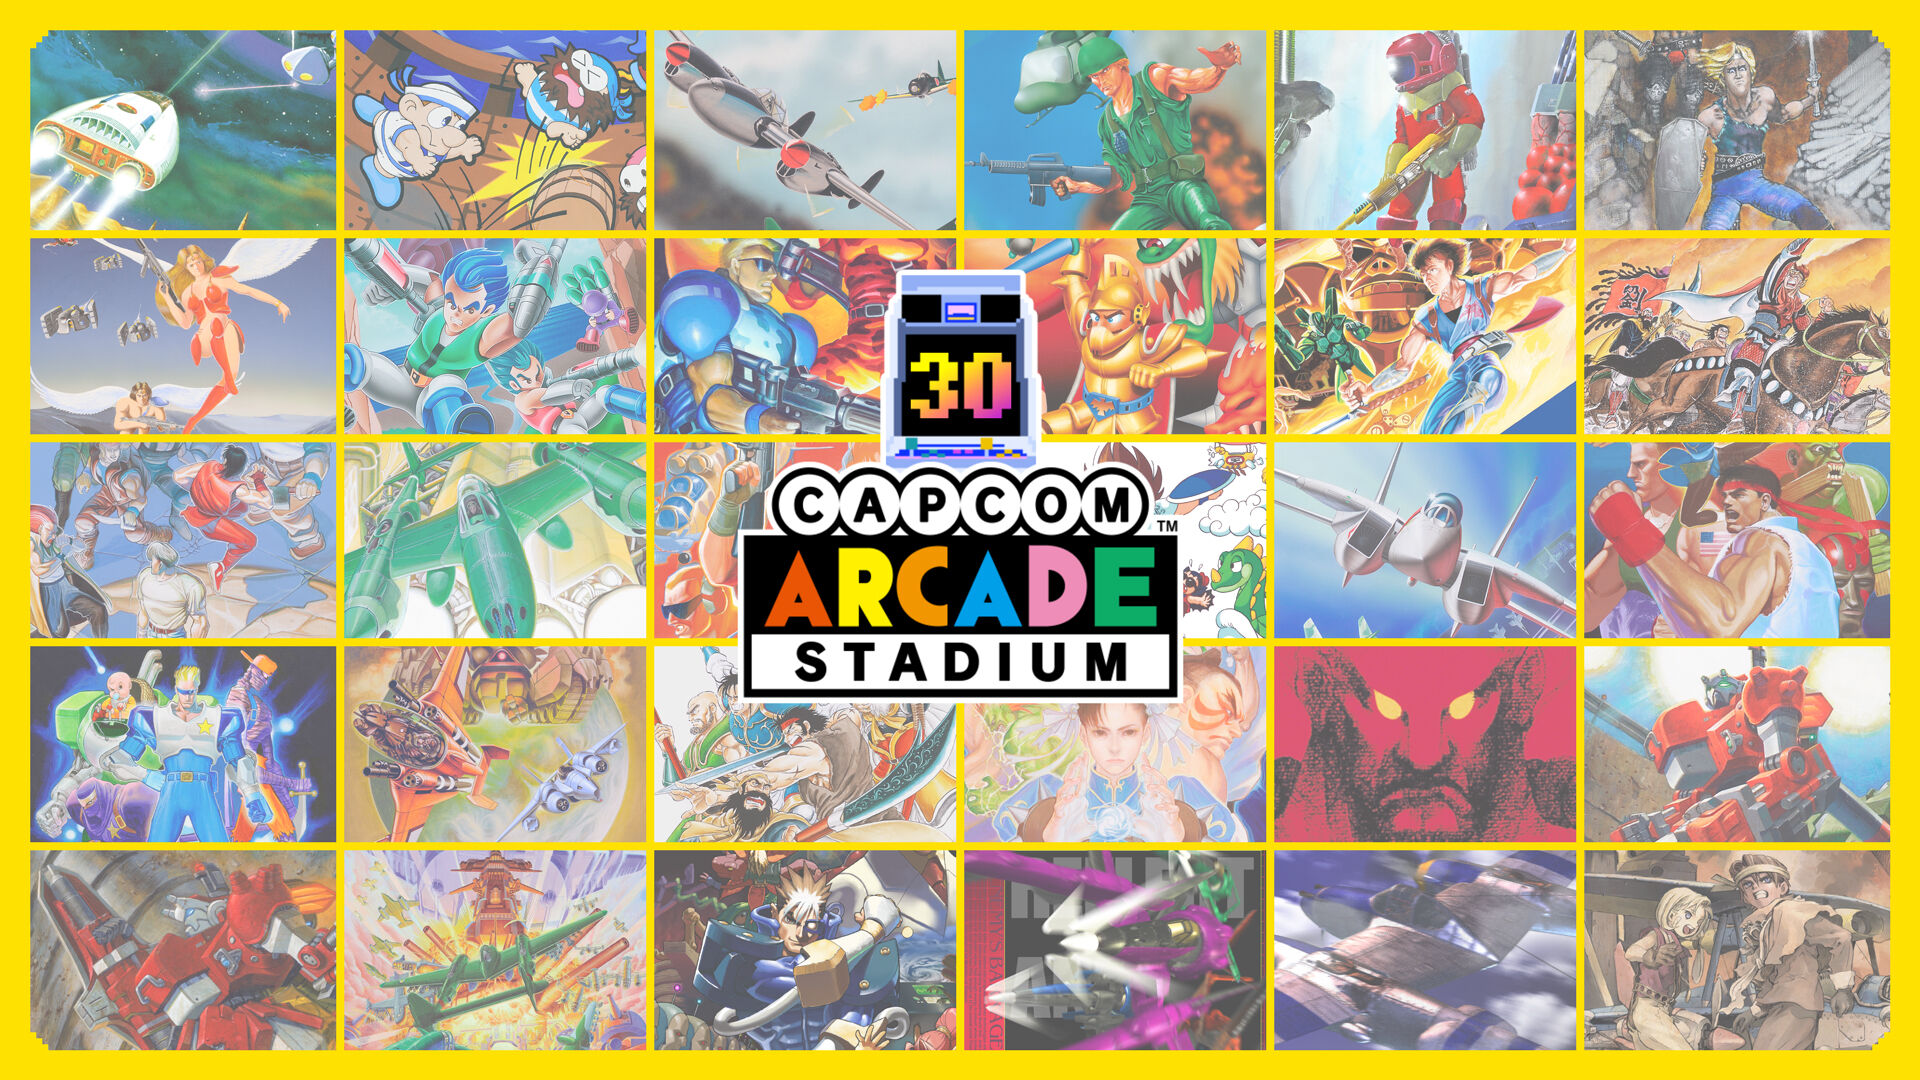 Capcom Arcade Stadium Bundle ダウンロード版 | My Nintendo Store 